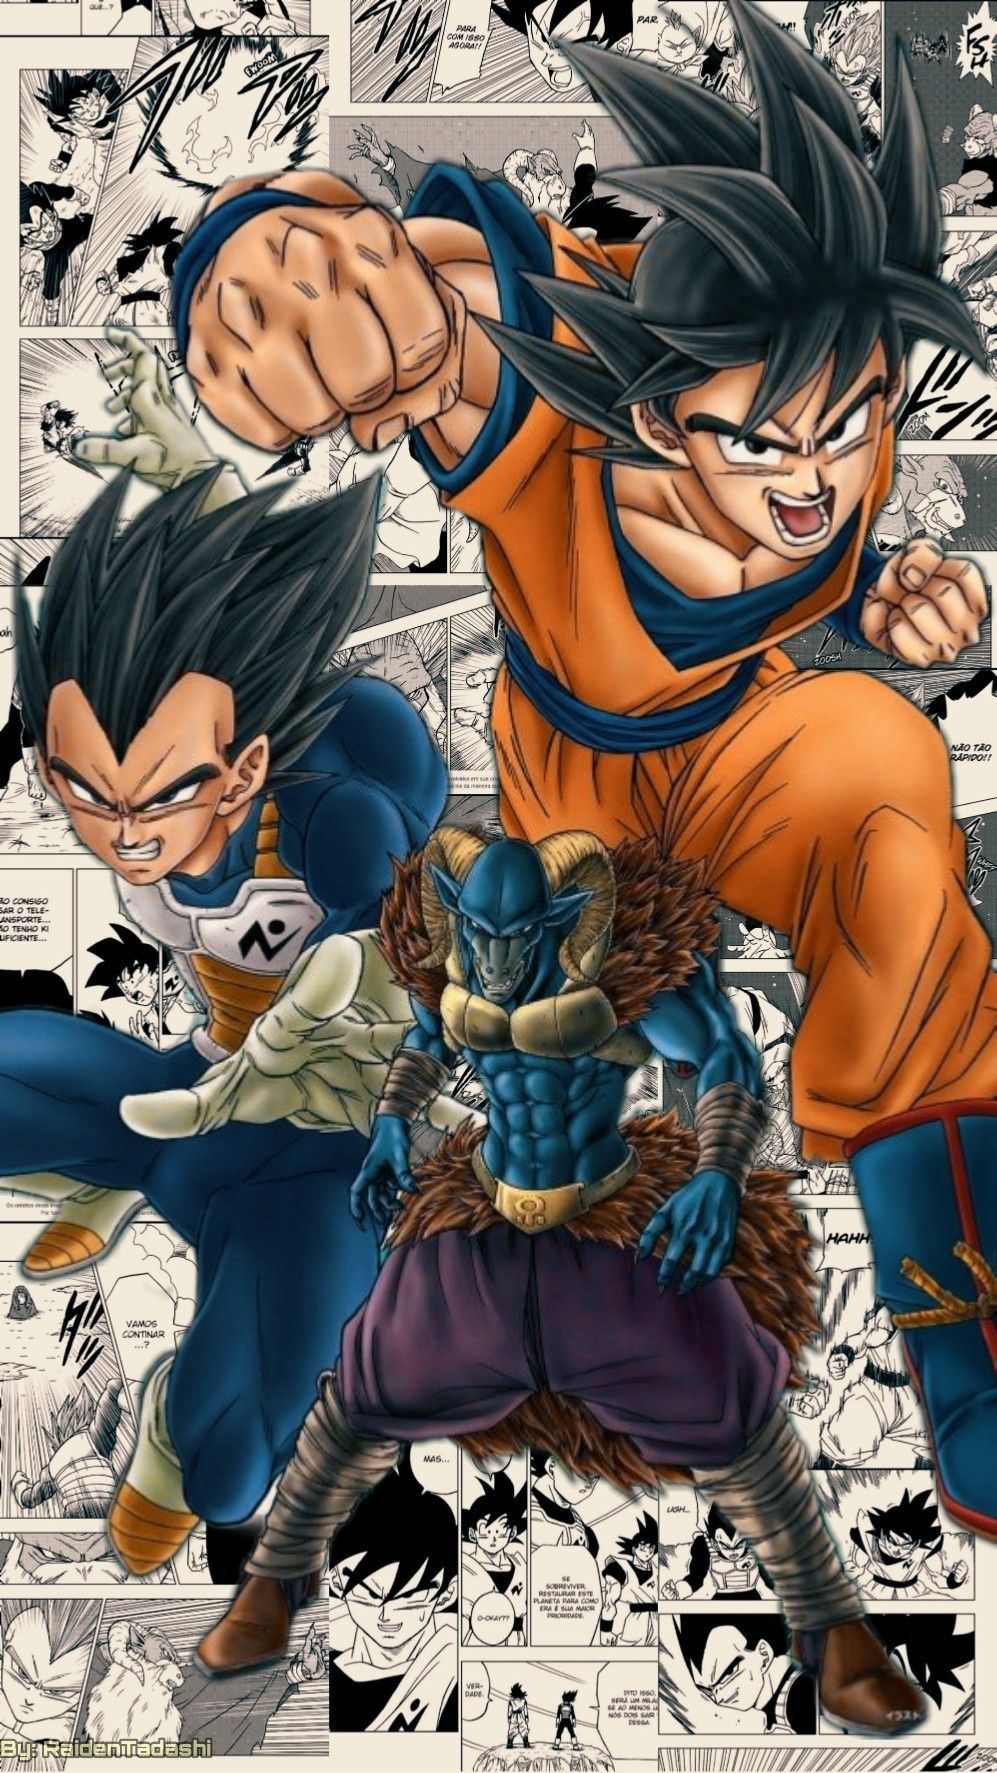 Dragon Ball Manga Wallpaper Free Dragon Ball Manga Background